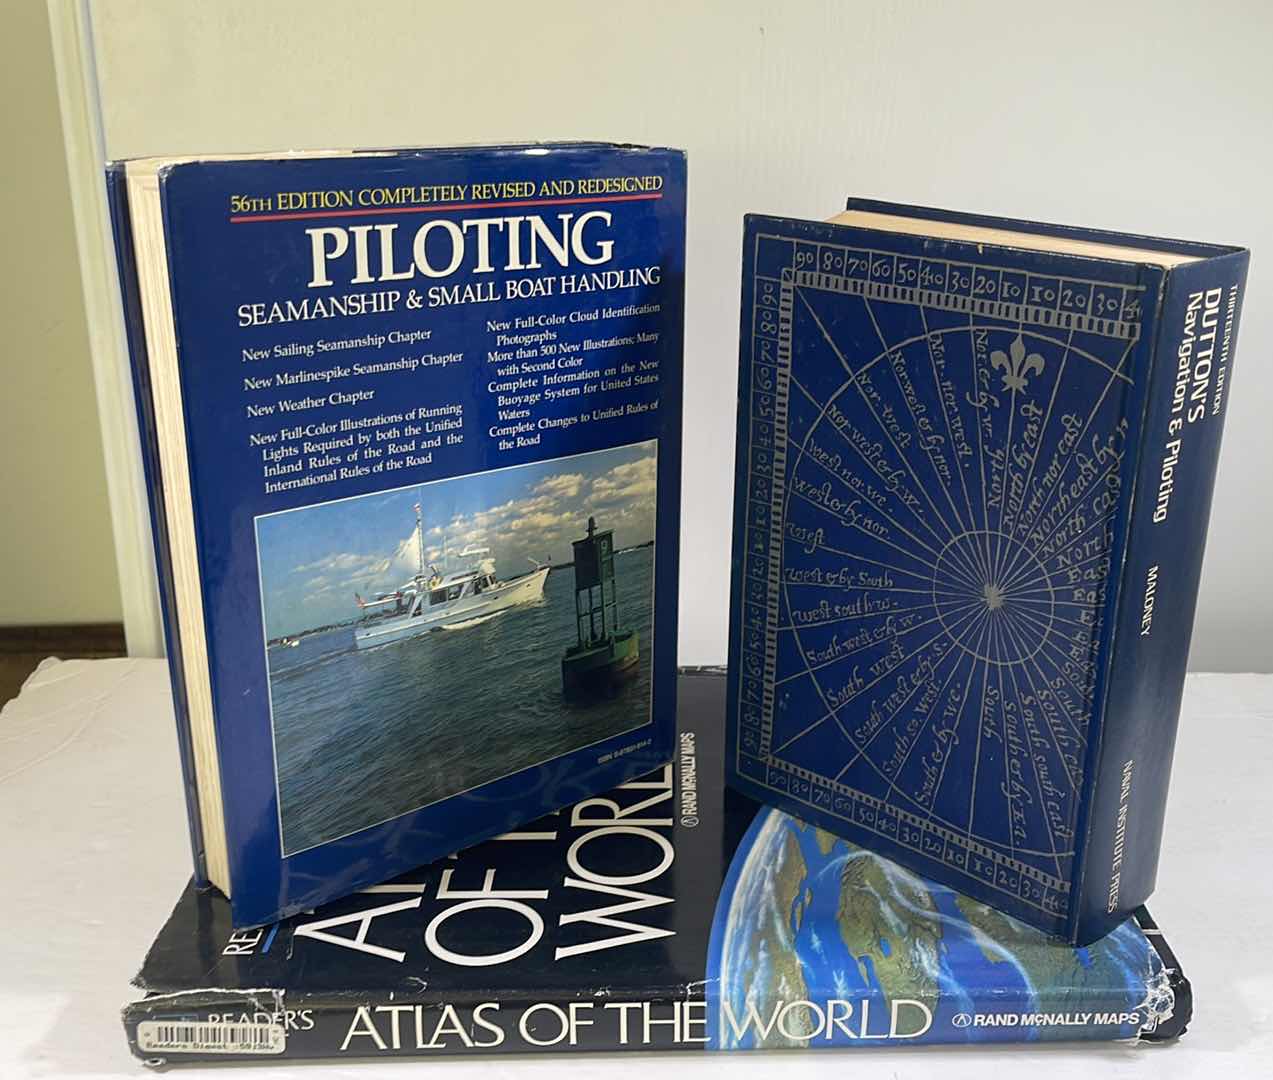 Photo 2 of NAVIGATION & PILOTING BOOKS WITH WORLD ATLAS